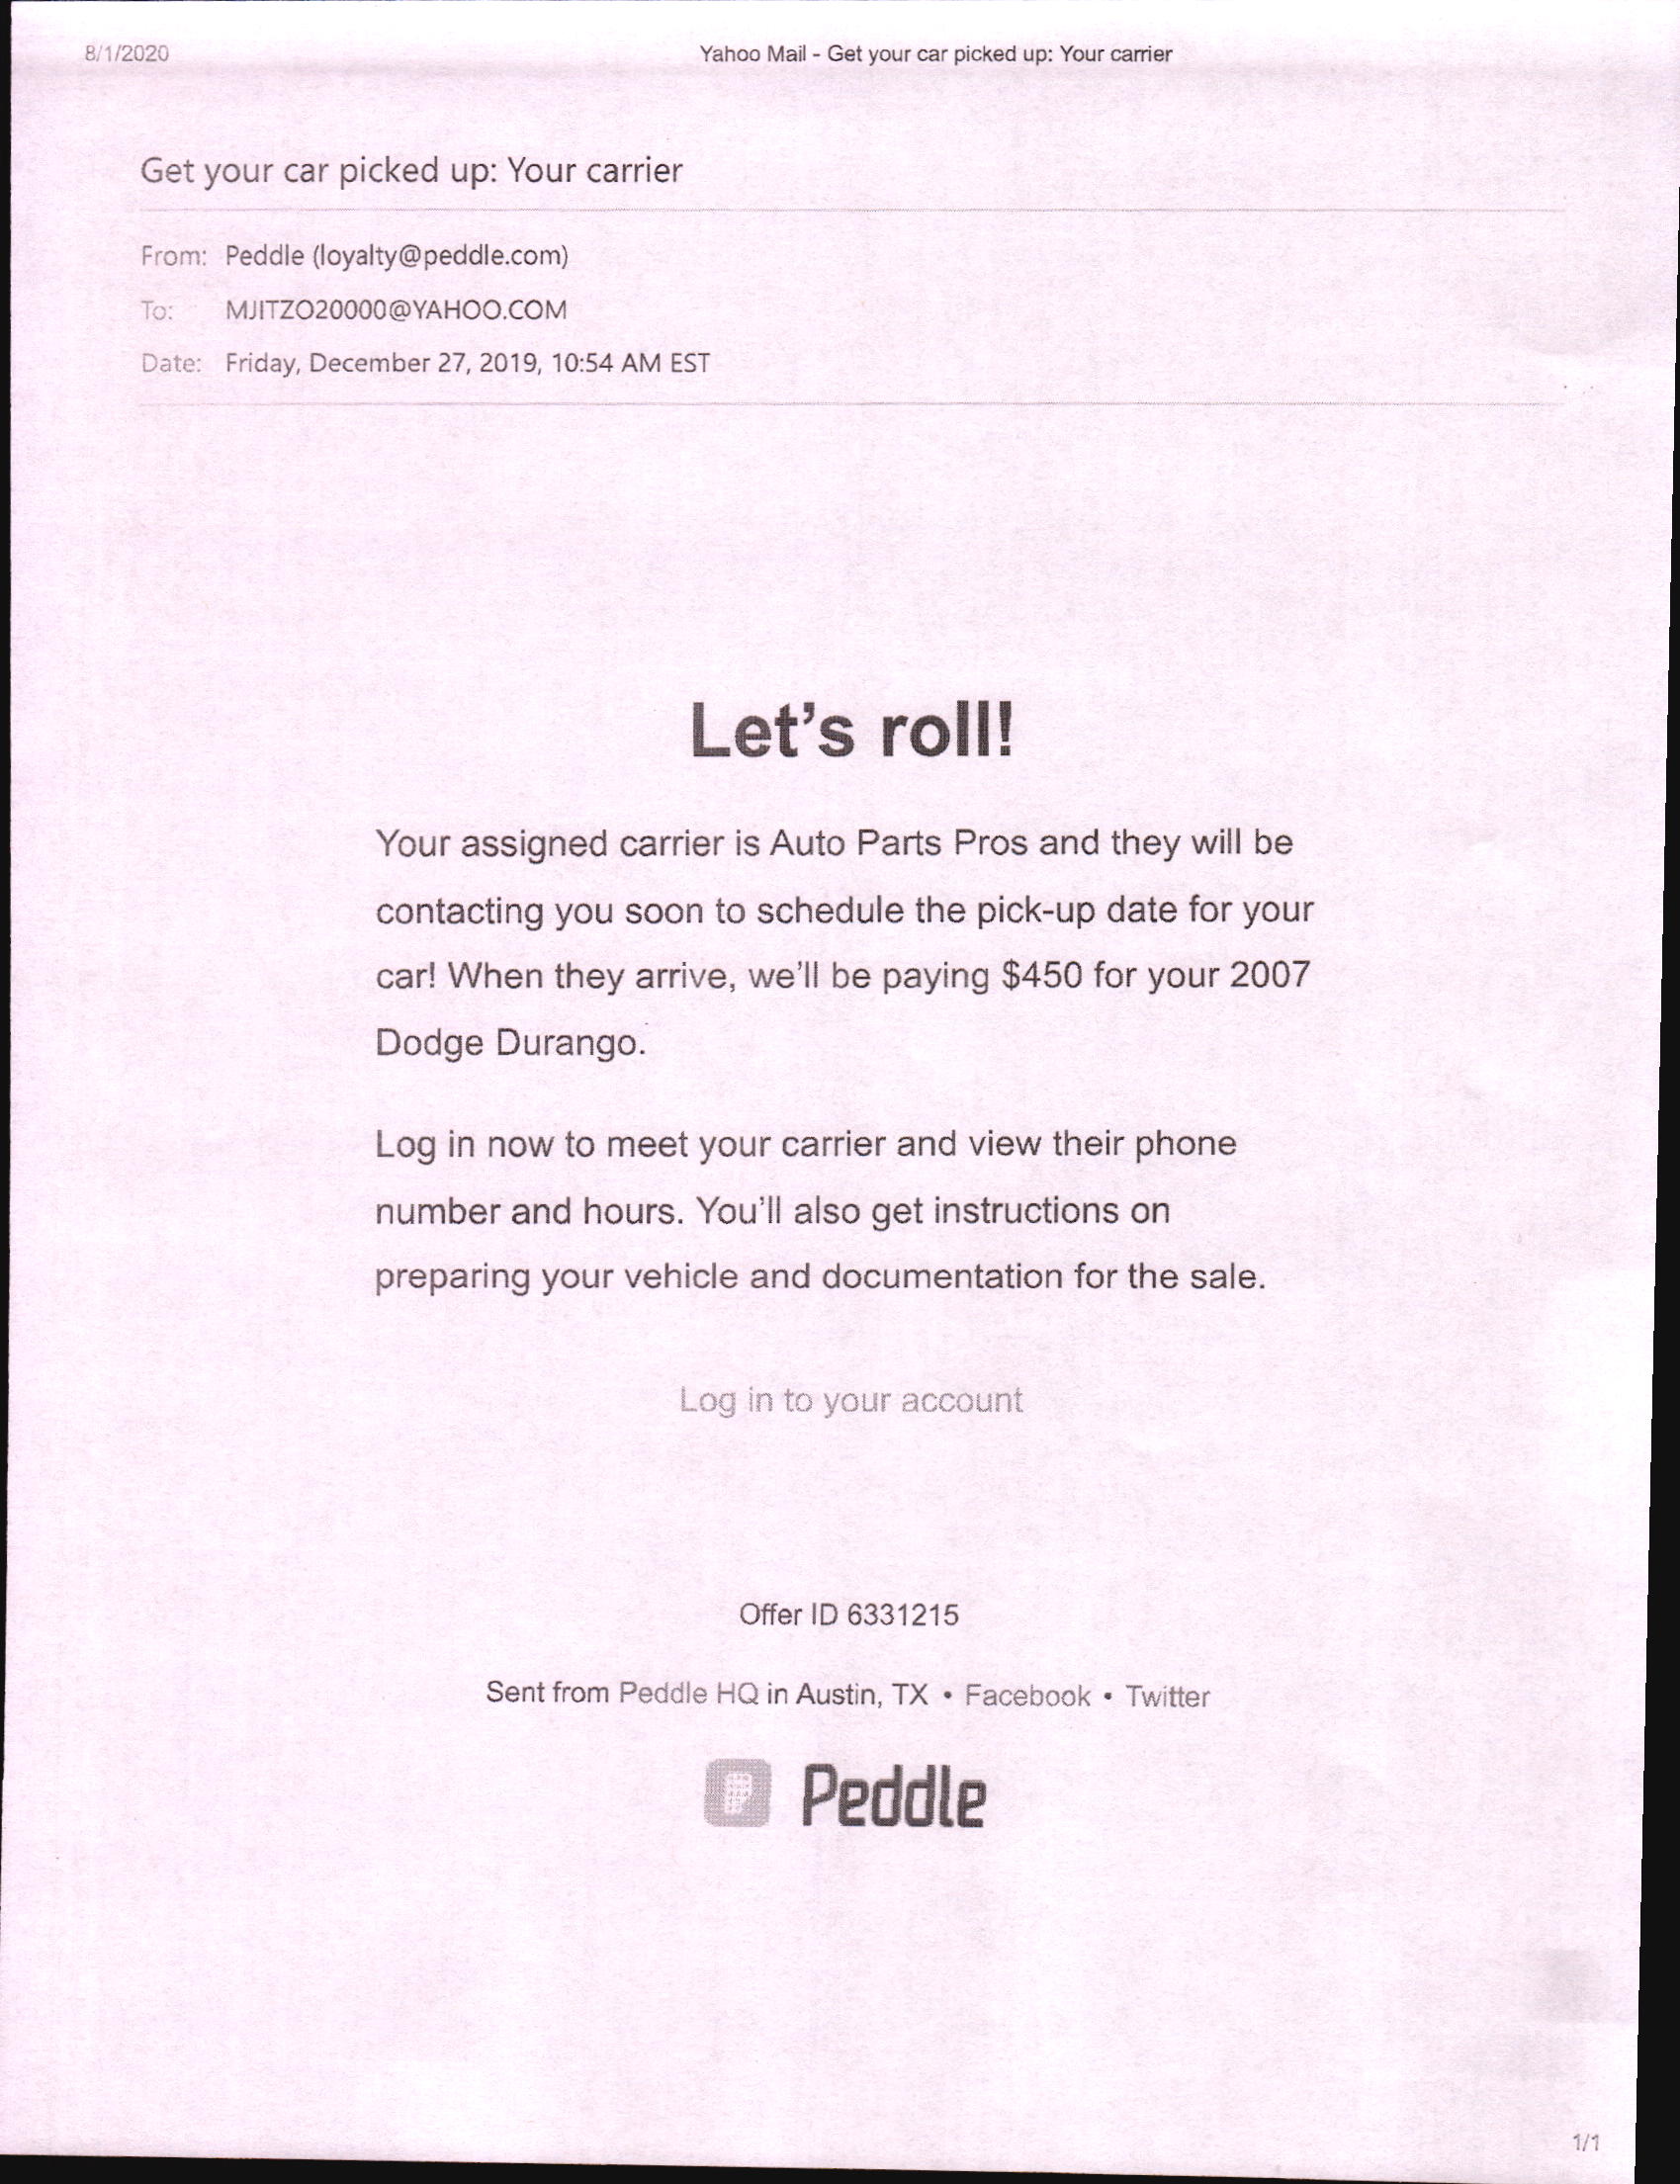 2007 Dodge Durango was sold through "Peddle" 